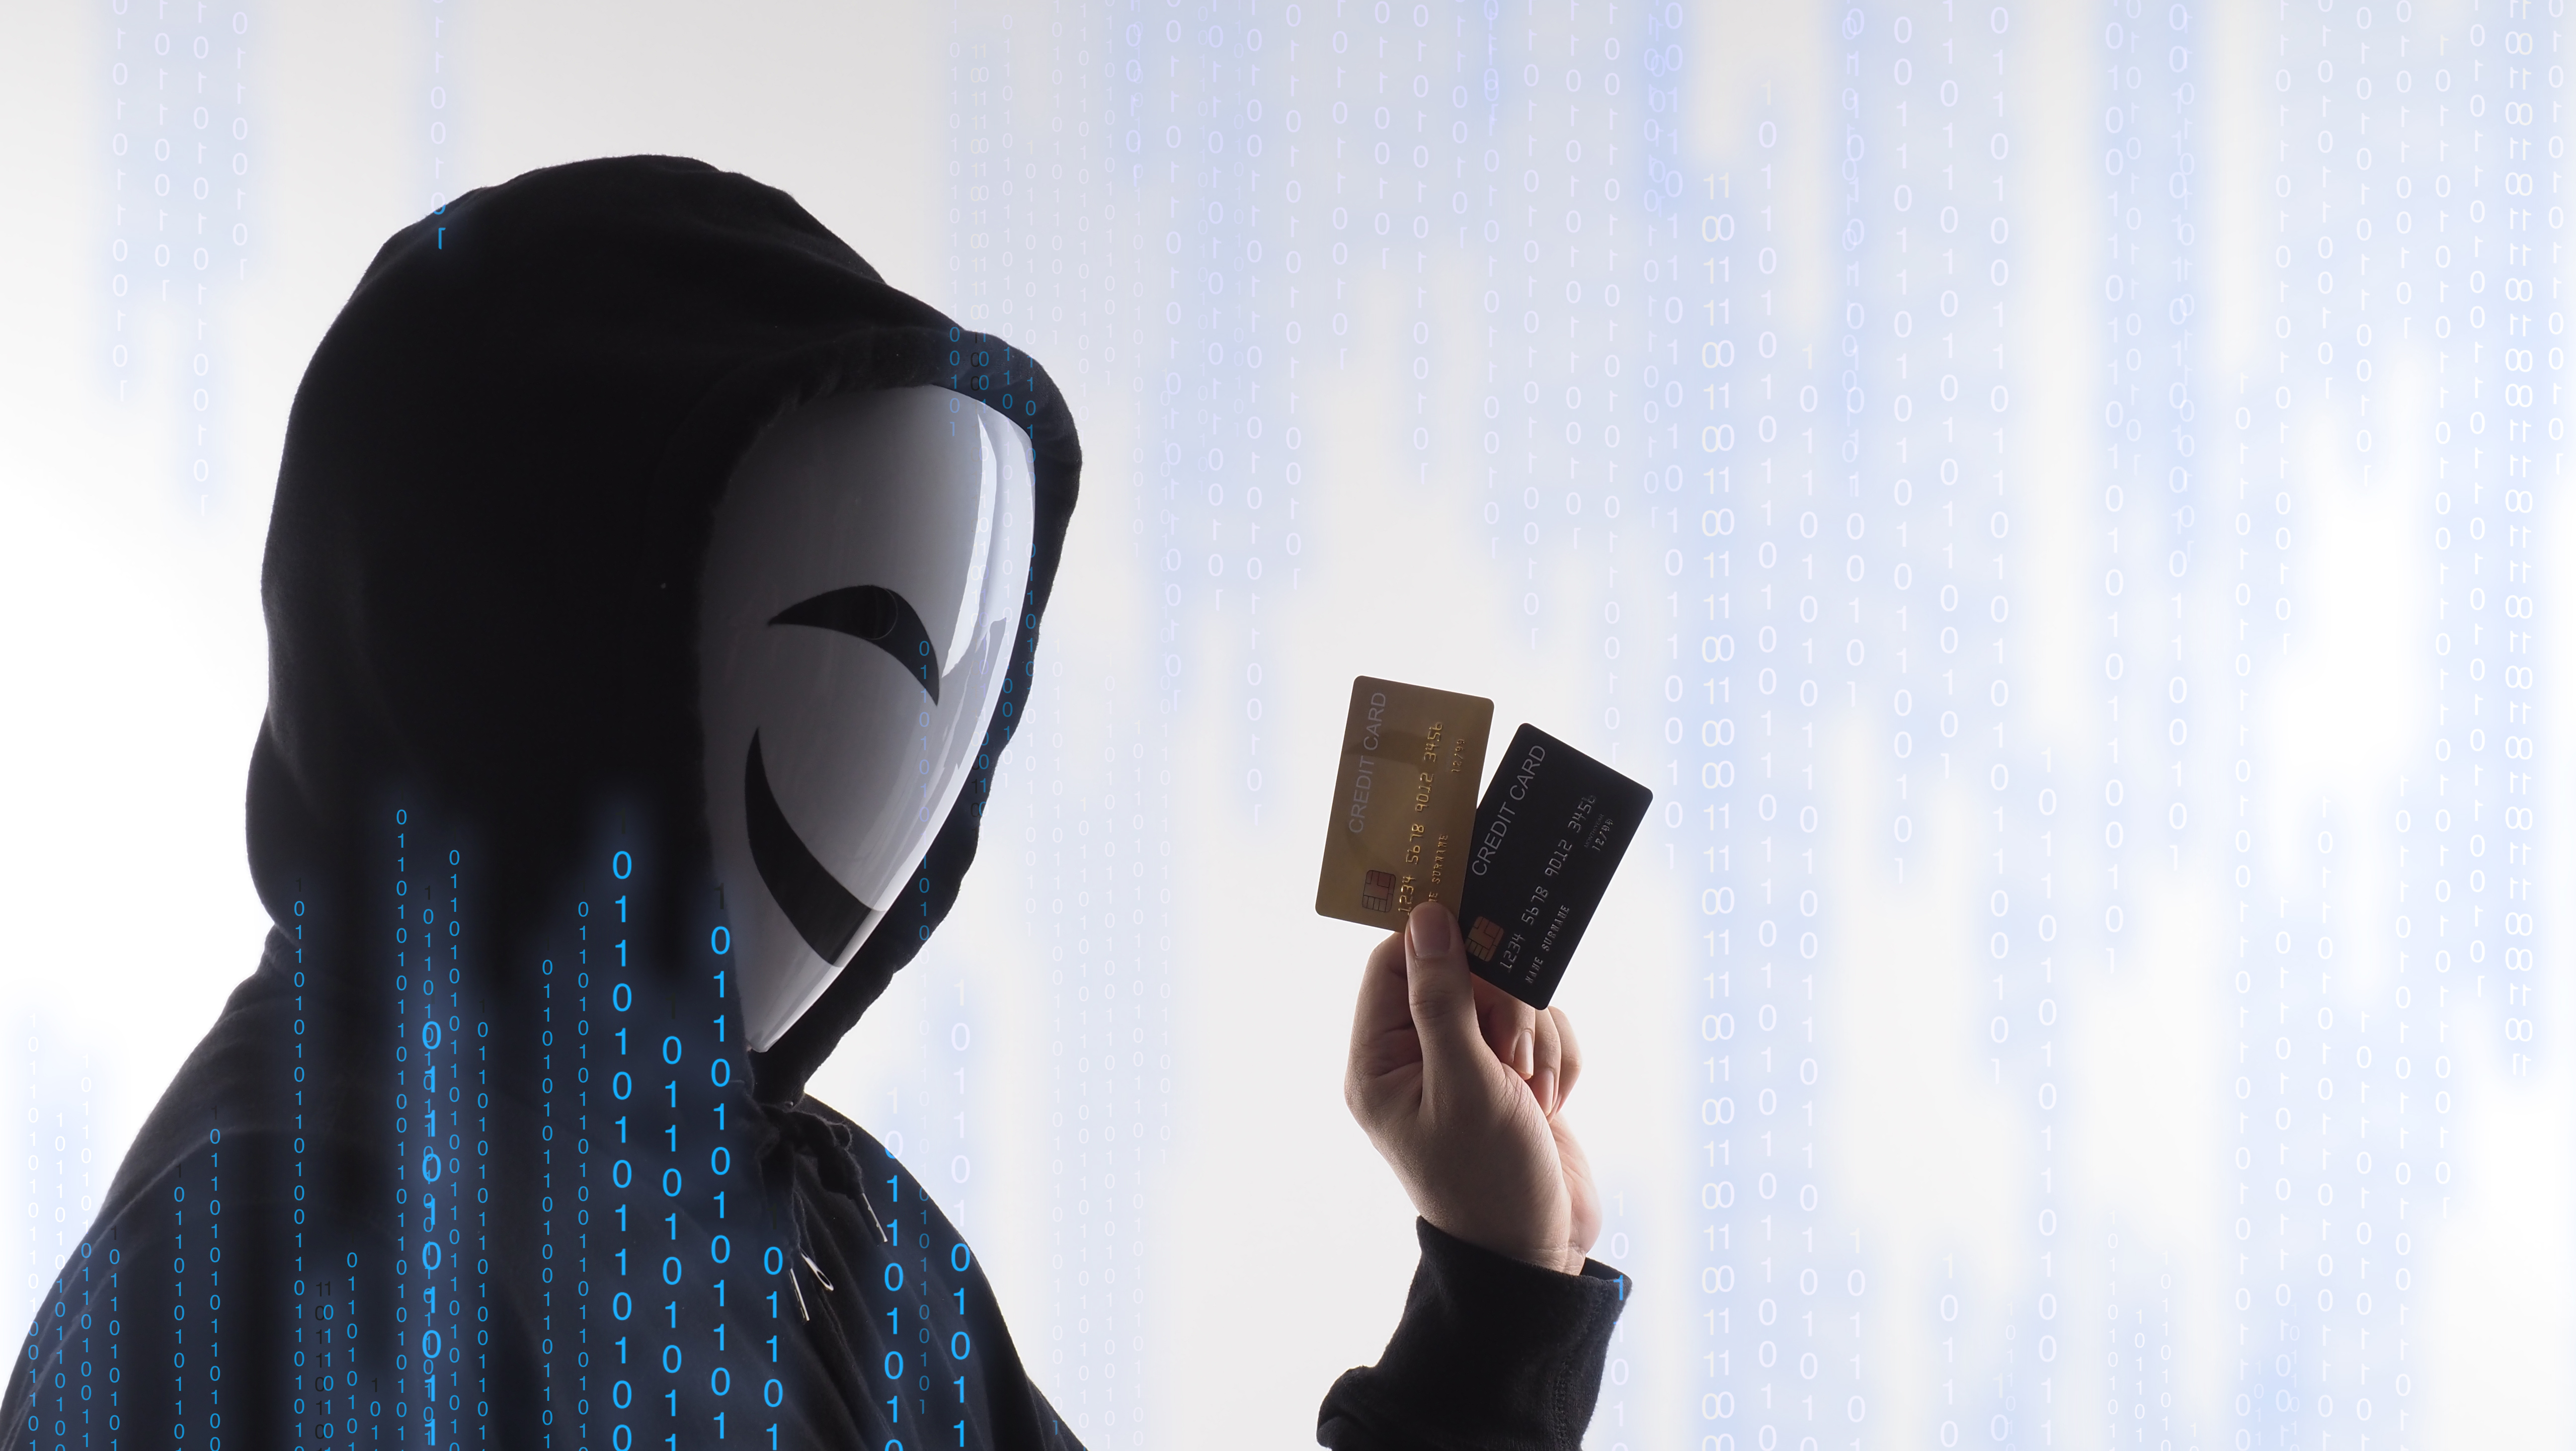 Hacker-stealing-credit-cards-data-1348335.jpg